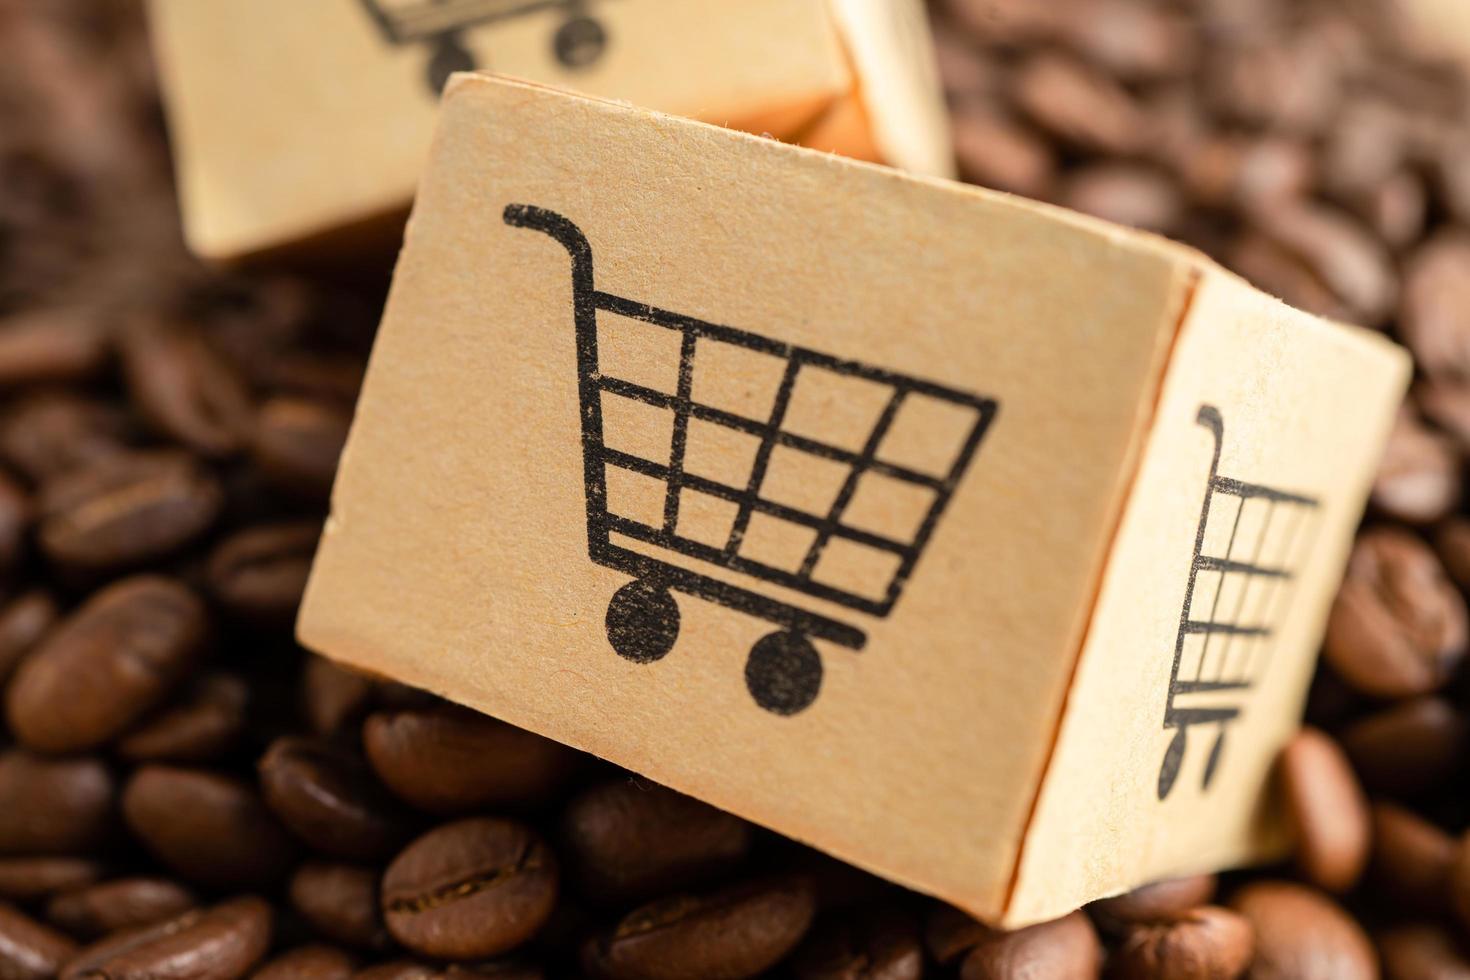 låda med kundvagn logotyp symbol på kaffebönor, import export shopping online eller e -handel leverans service butik produkt frakt, handel, leverantör koncept foto